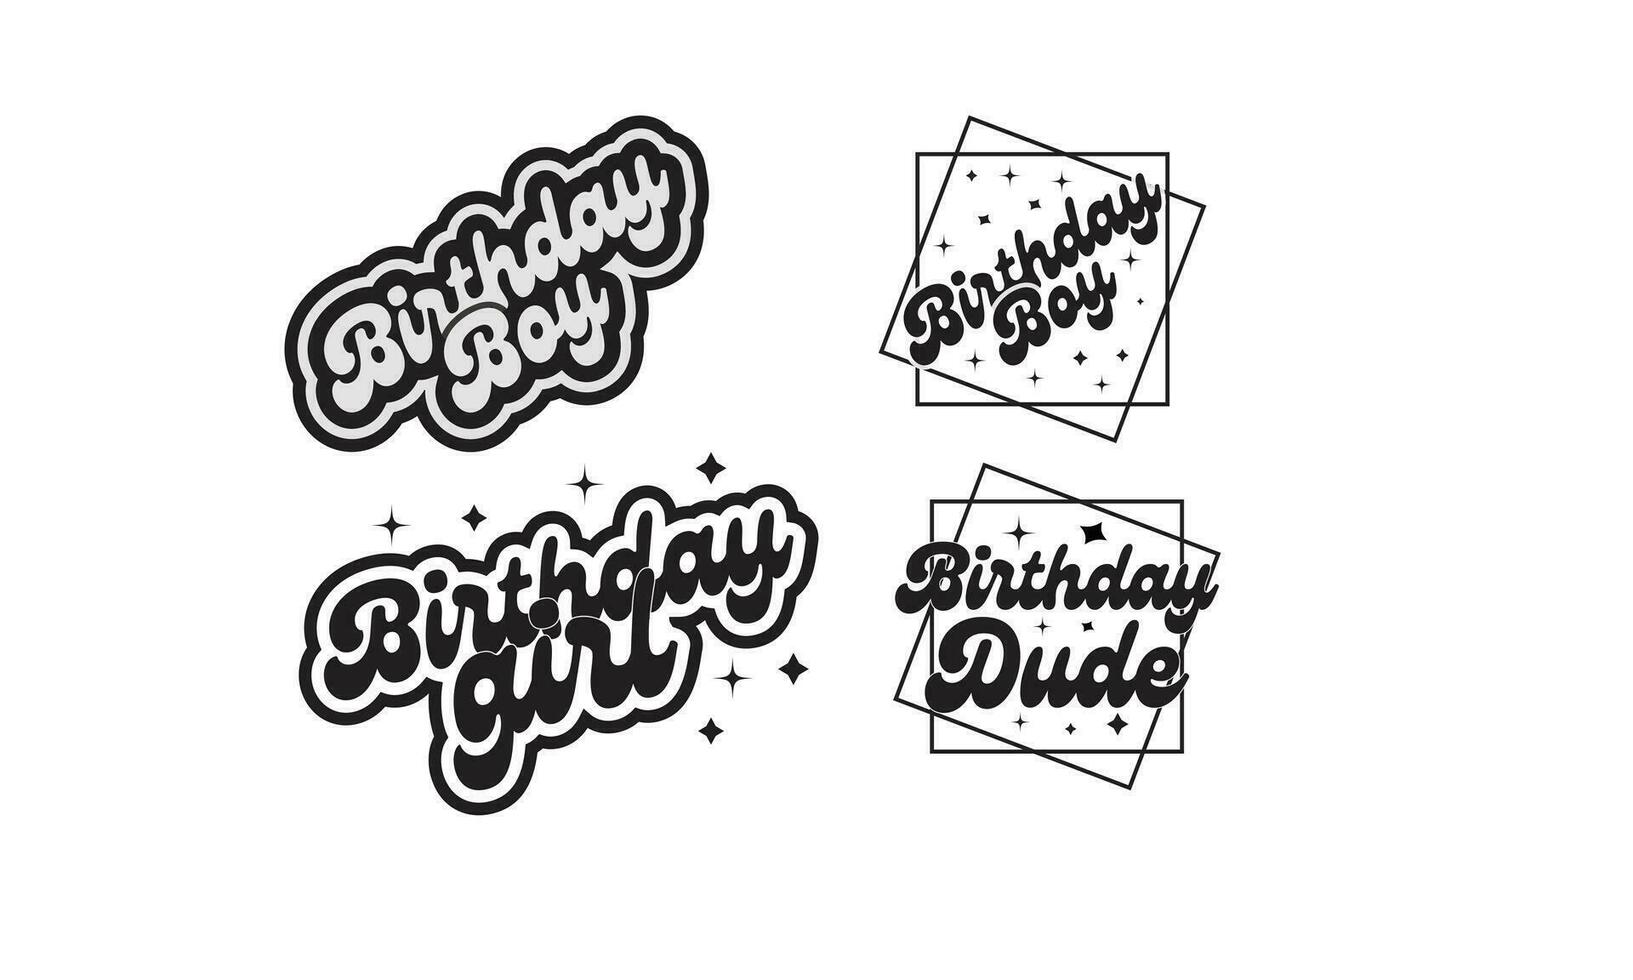 Birthday-bundles,Birthday Boy, Birthday Girl, Birthday Dude shirt. vector